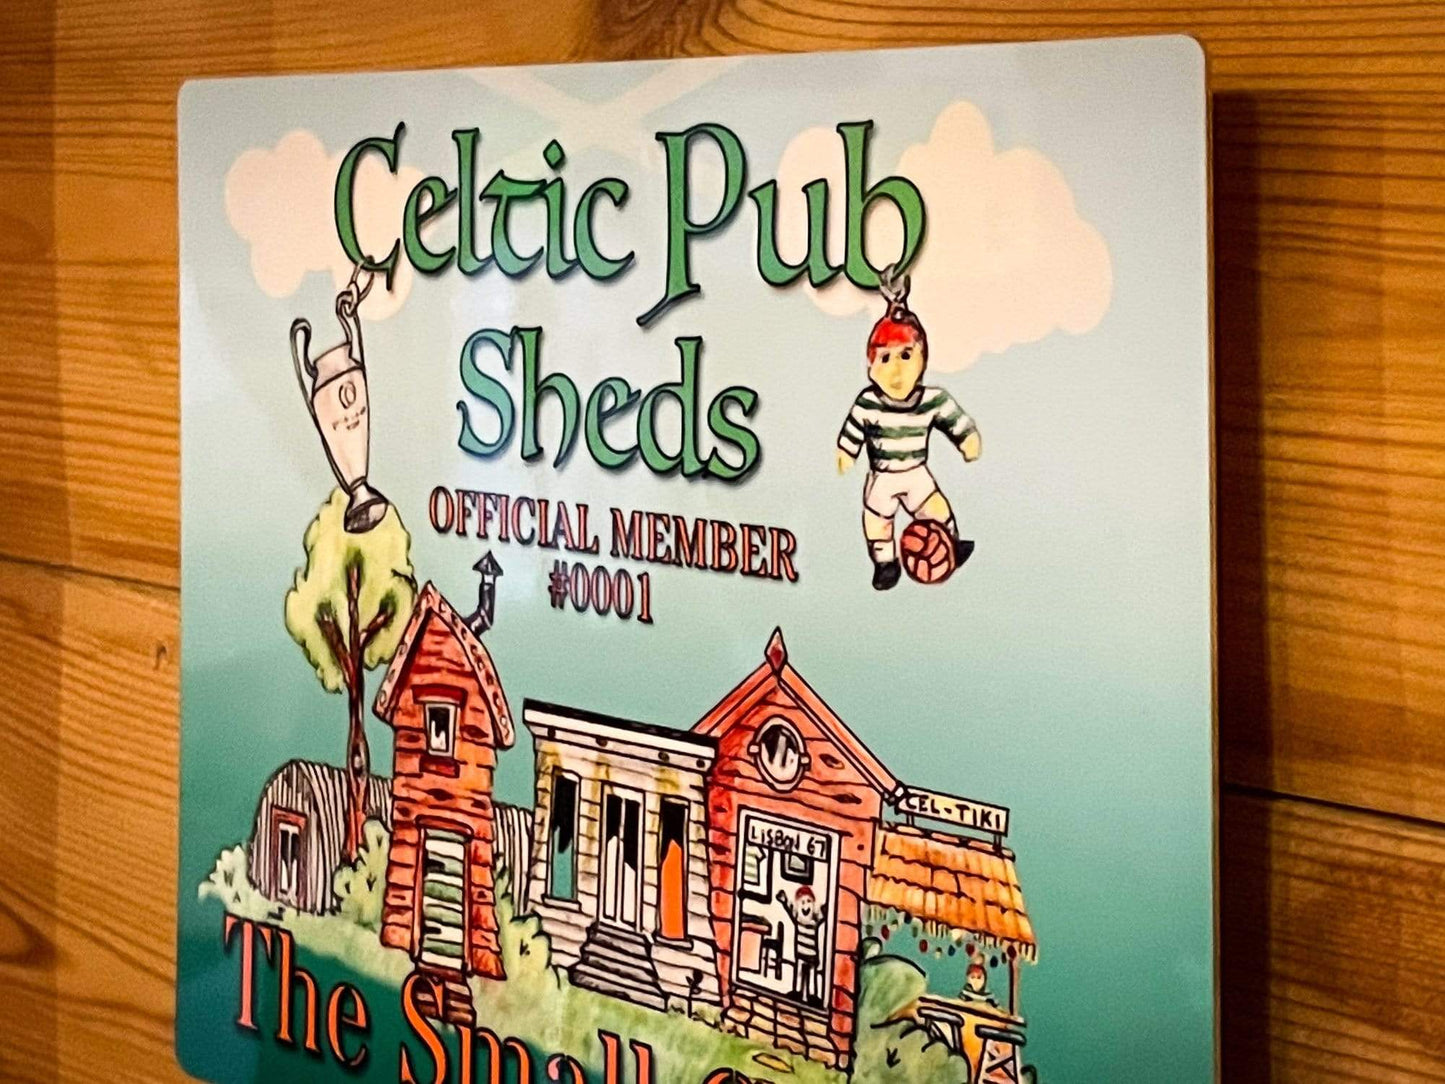 Celtic Pub Sheds Official Members Plaque Raise the Bar Print and Design - Raise the Bar